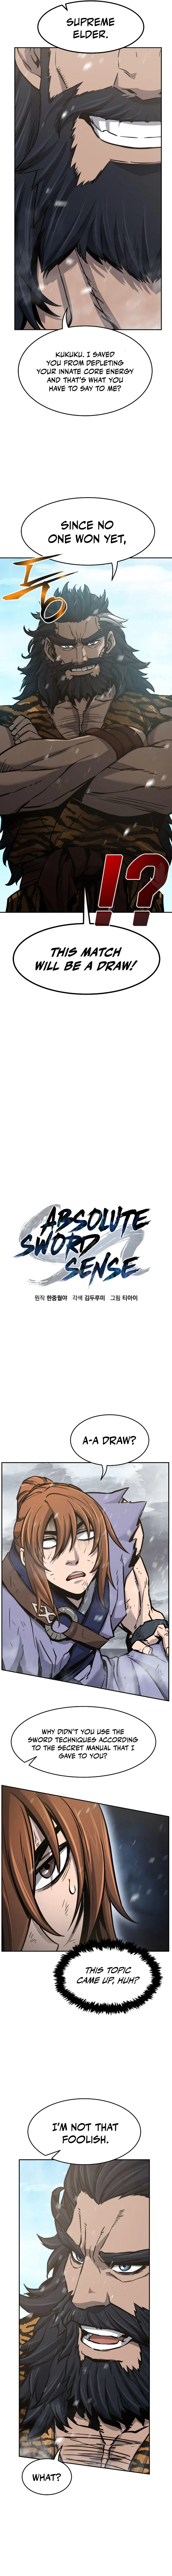 Absolute Sword Sense chapter 20